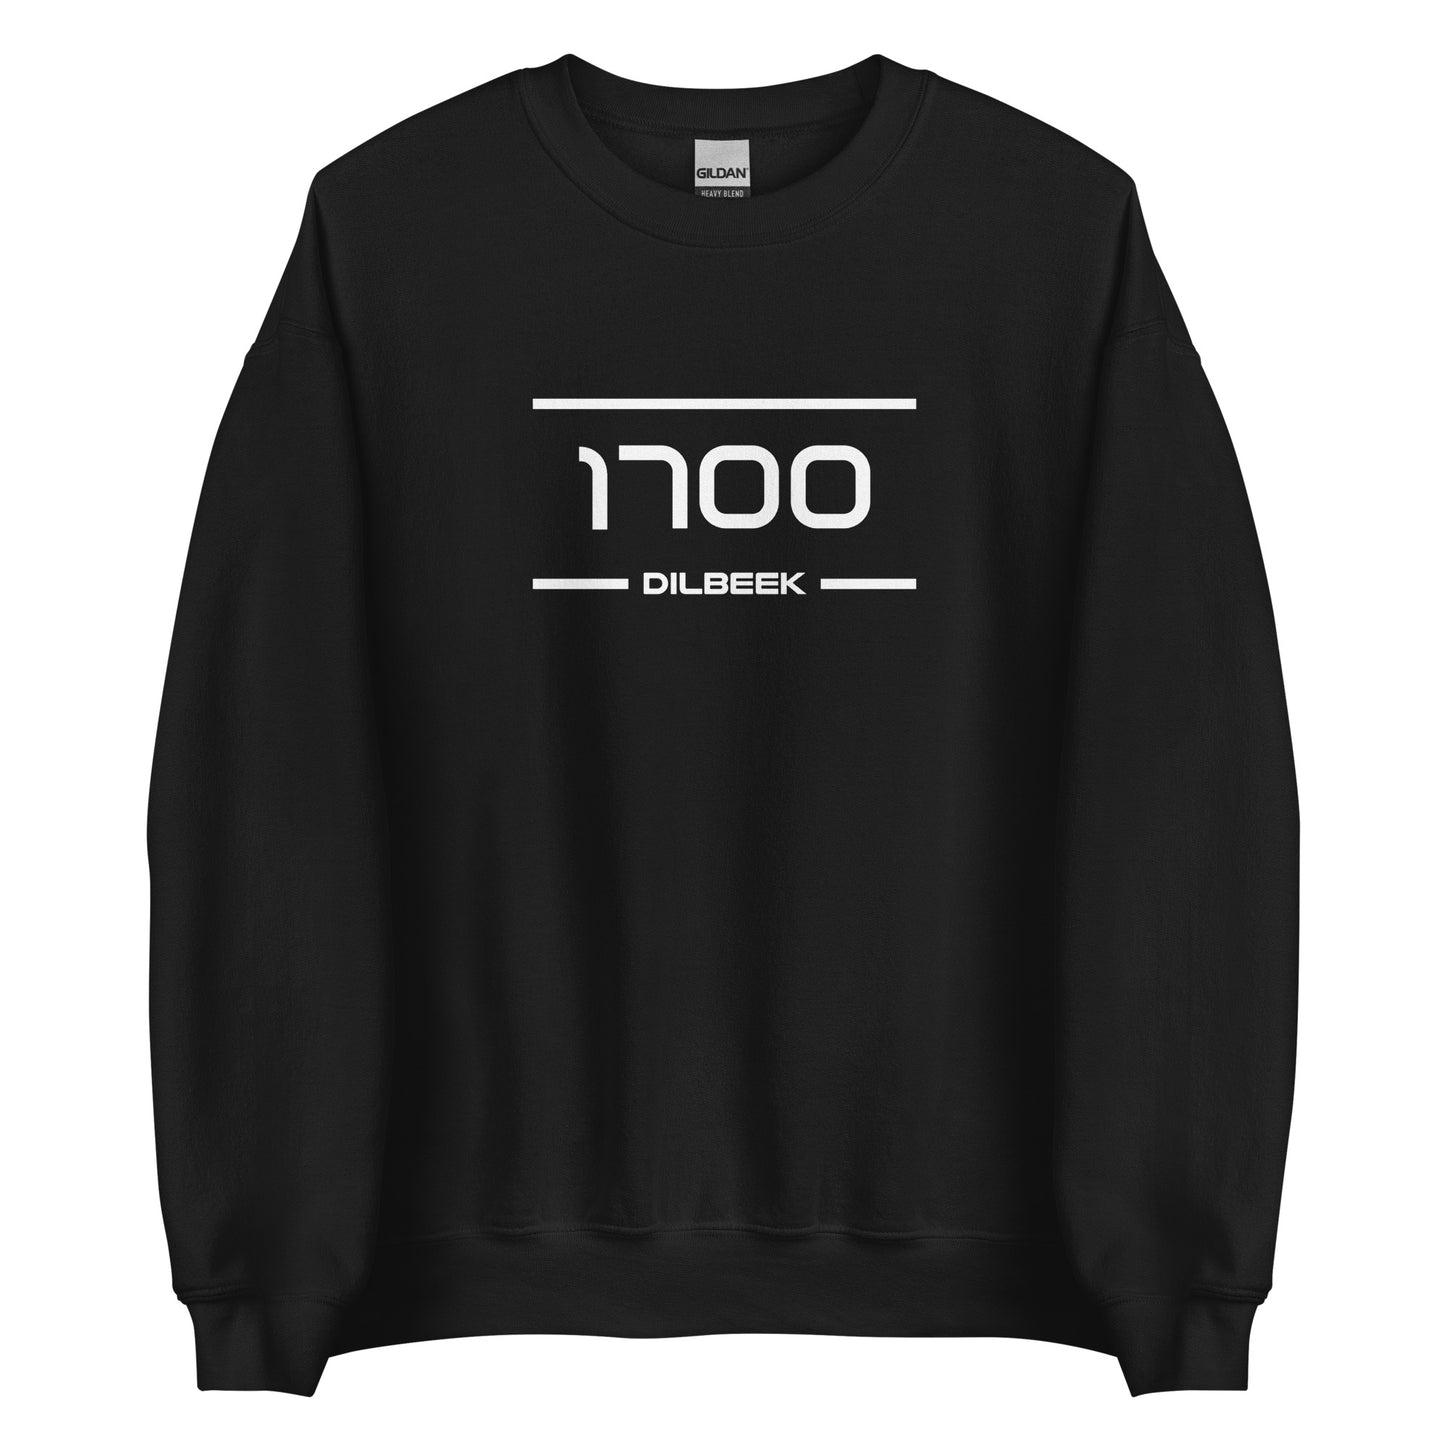 Sweater - 1700 - Dilbeek (M/V)